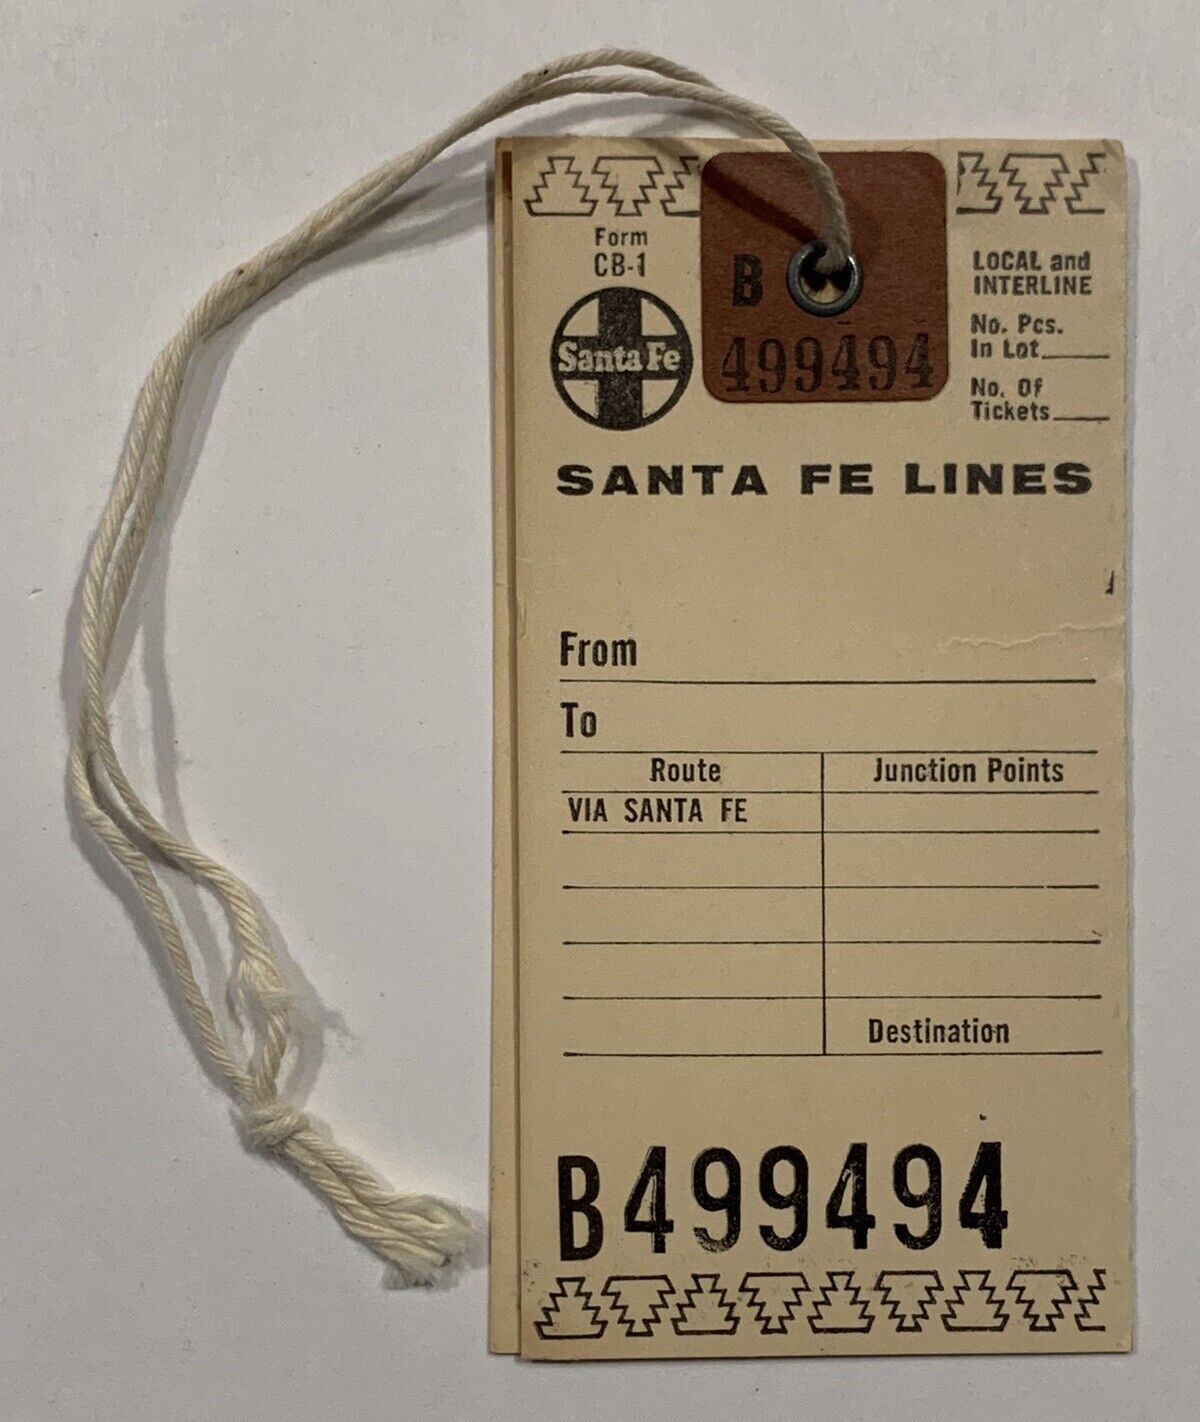  LUGGAGE TAG: SANTA FE LINES - Form CB-1 - Baggage Claim Ticket - Railroad